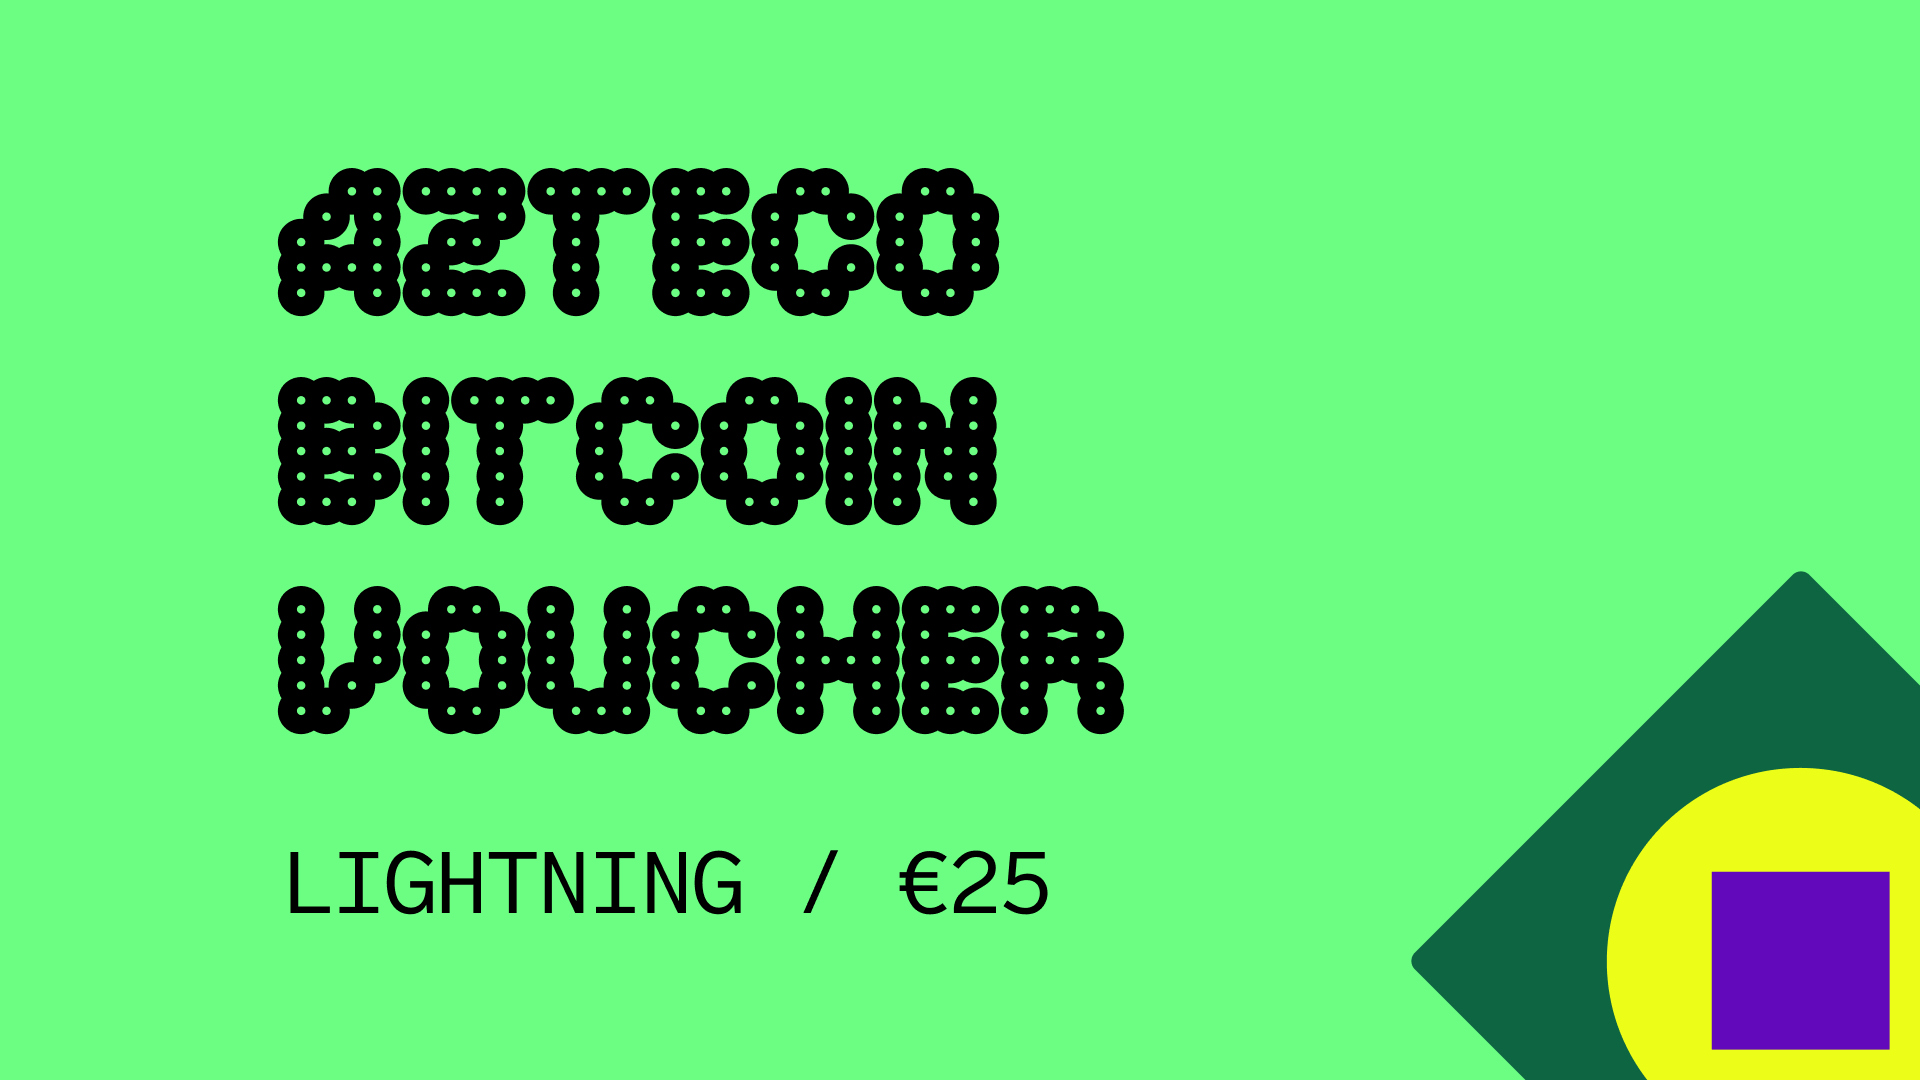 Azteco Bitcoin Lighting €25 Voucher $28.25